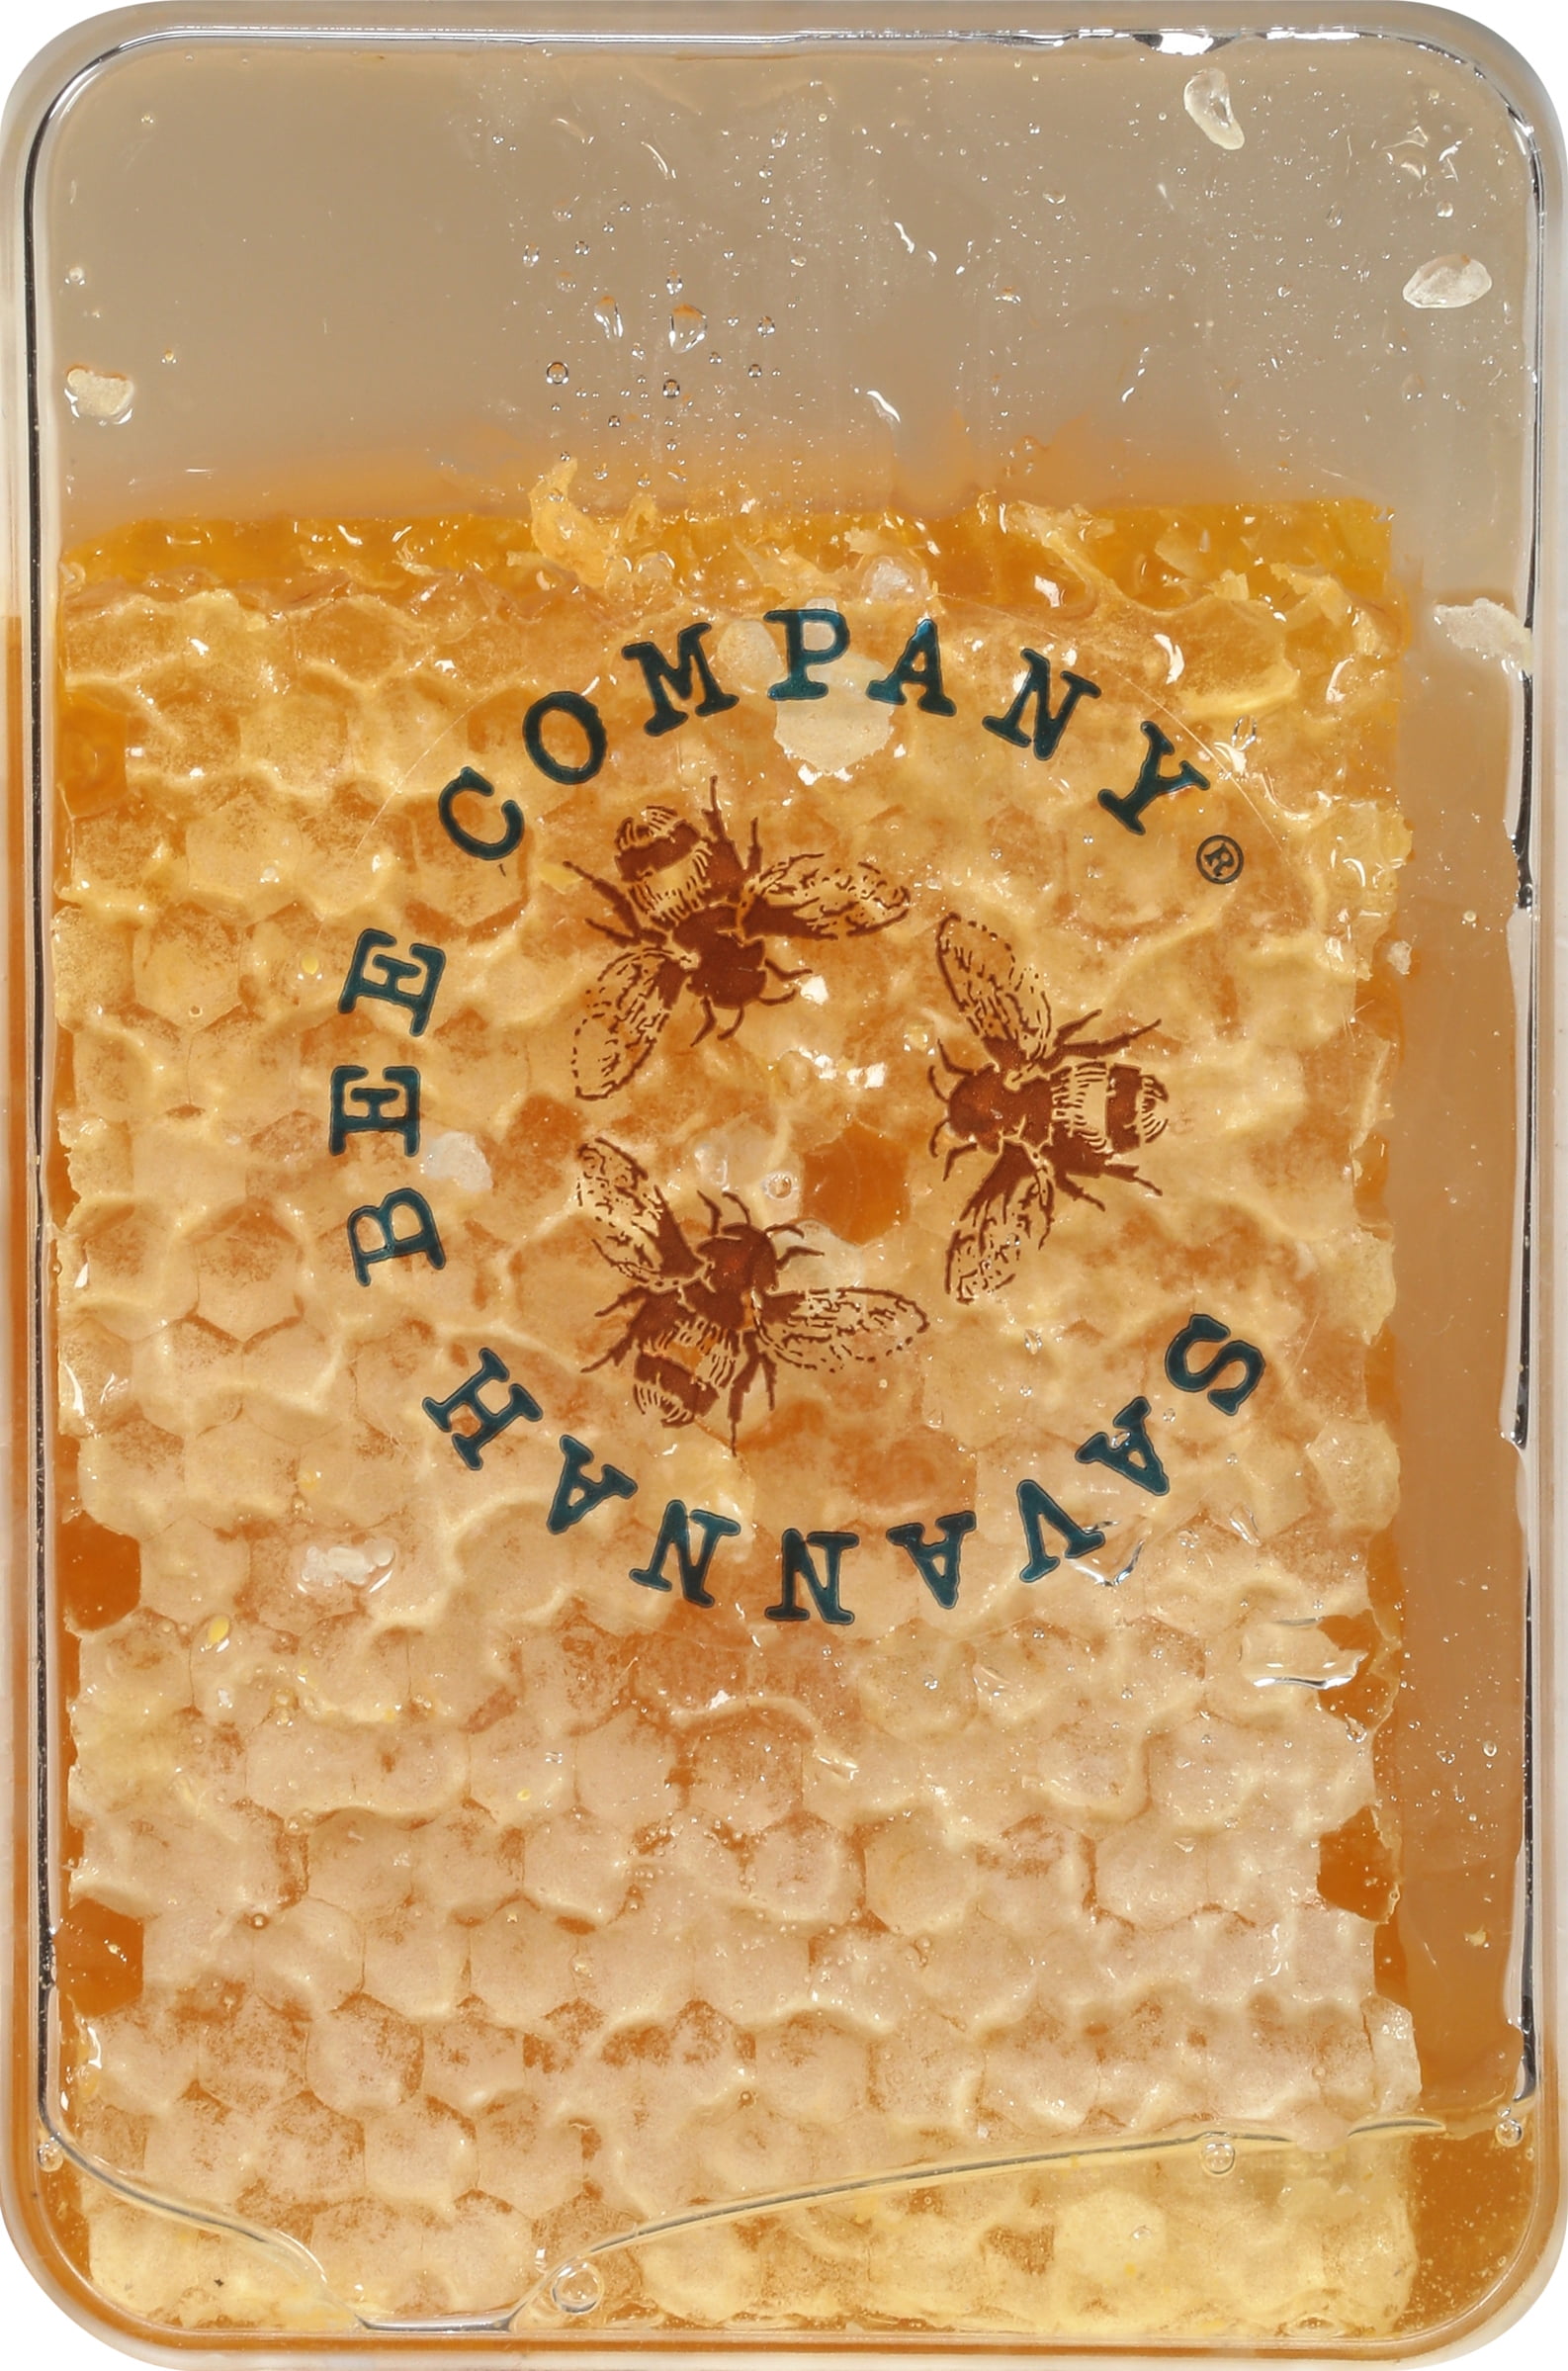 What is Honeycomb? – Savannah Bee Company